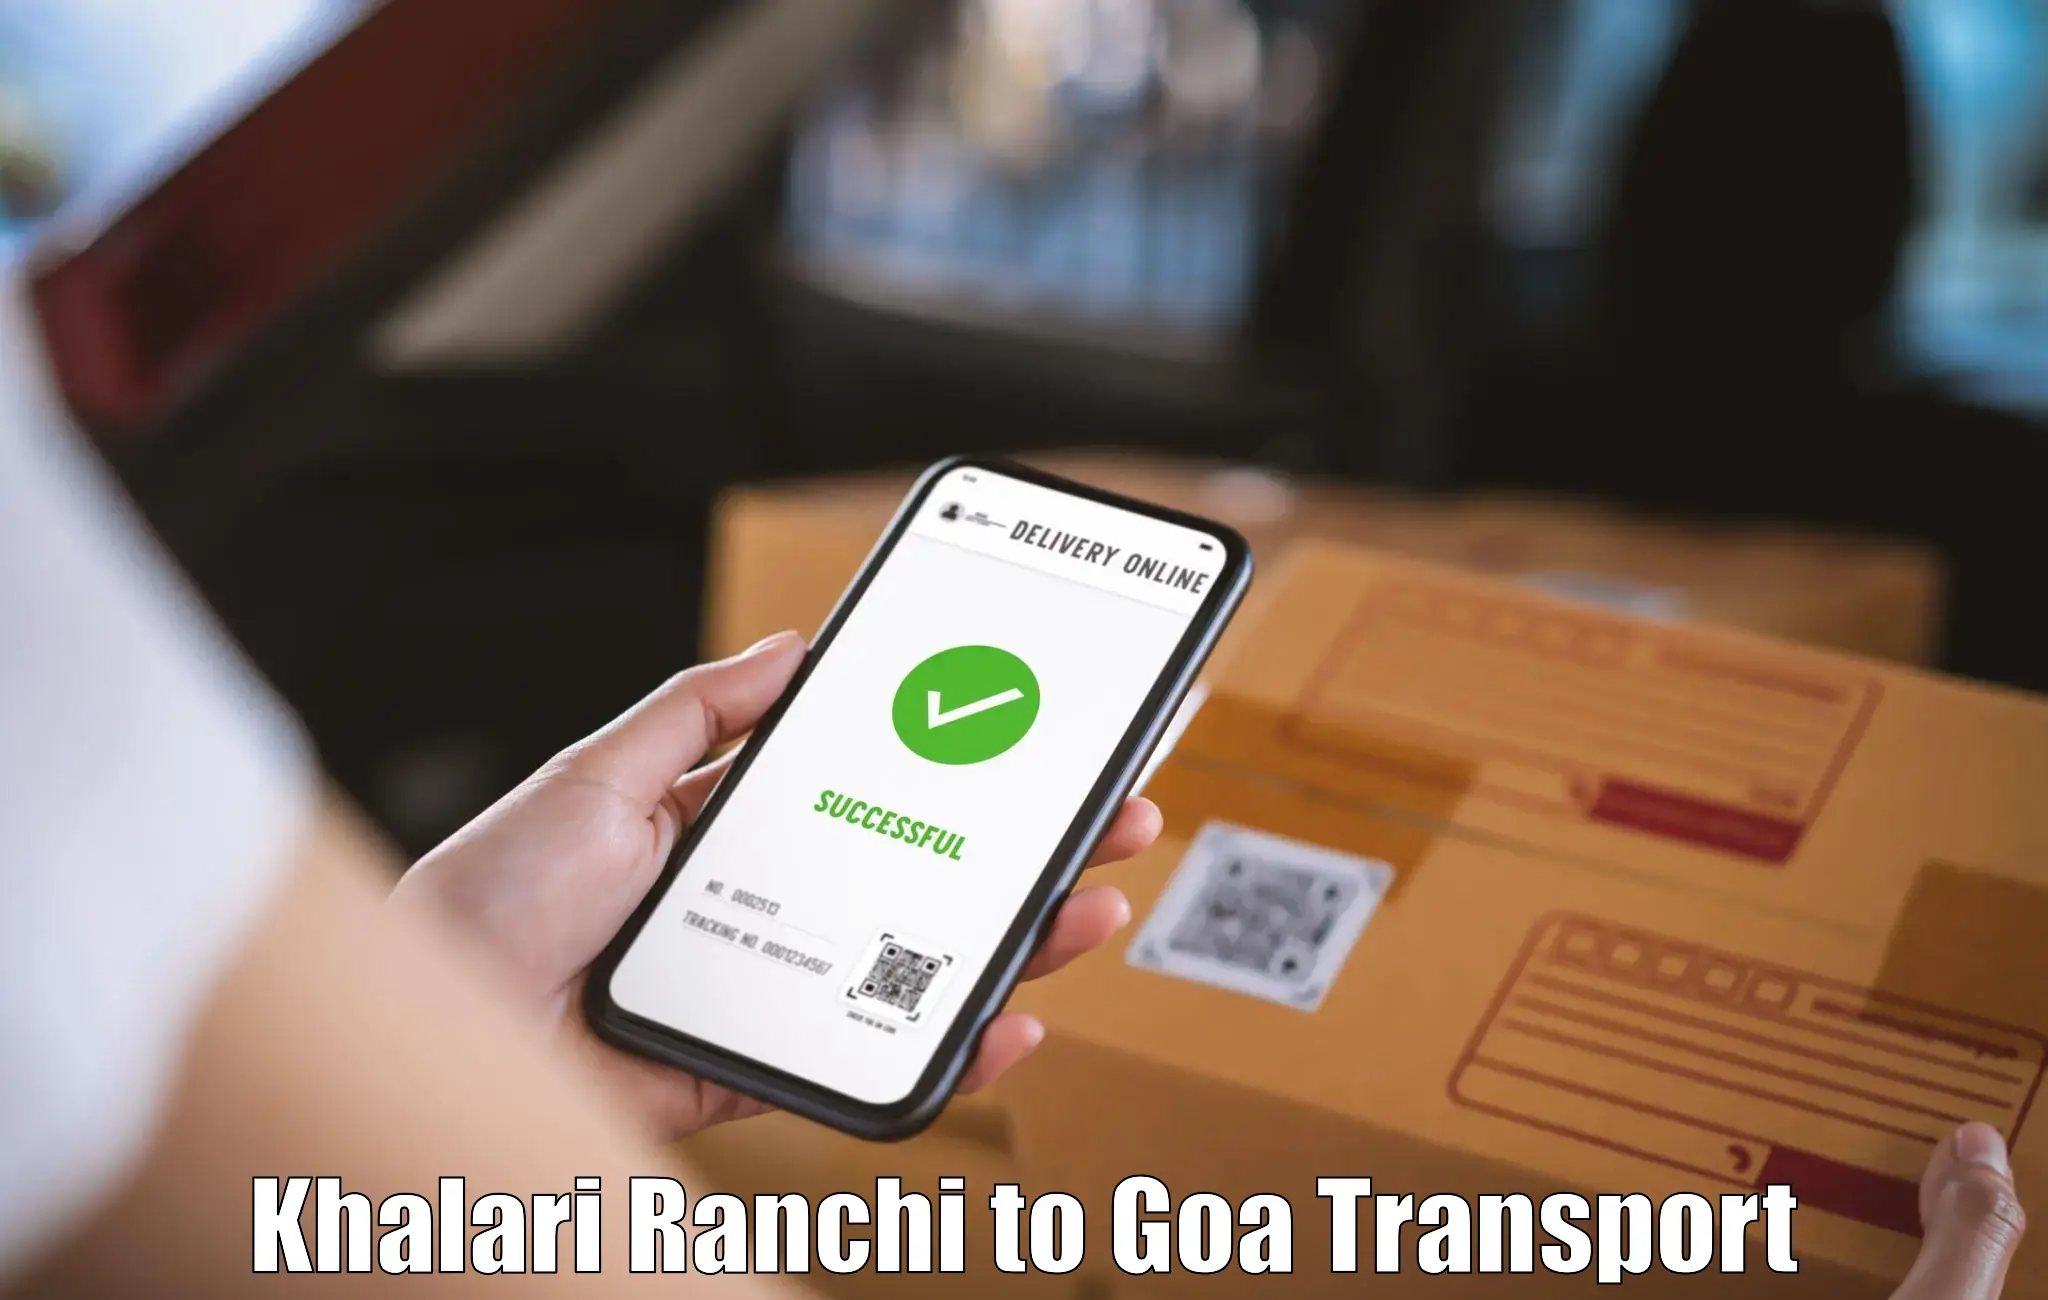 Pick up transport service Khalari Ranchi to Goa University